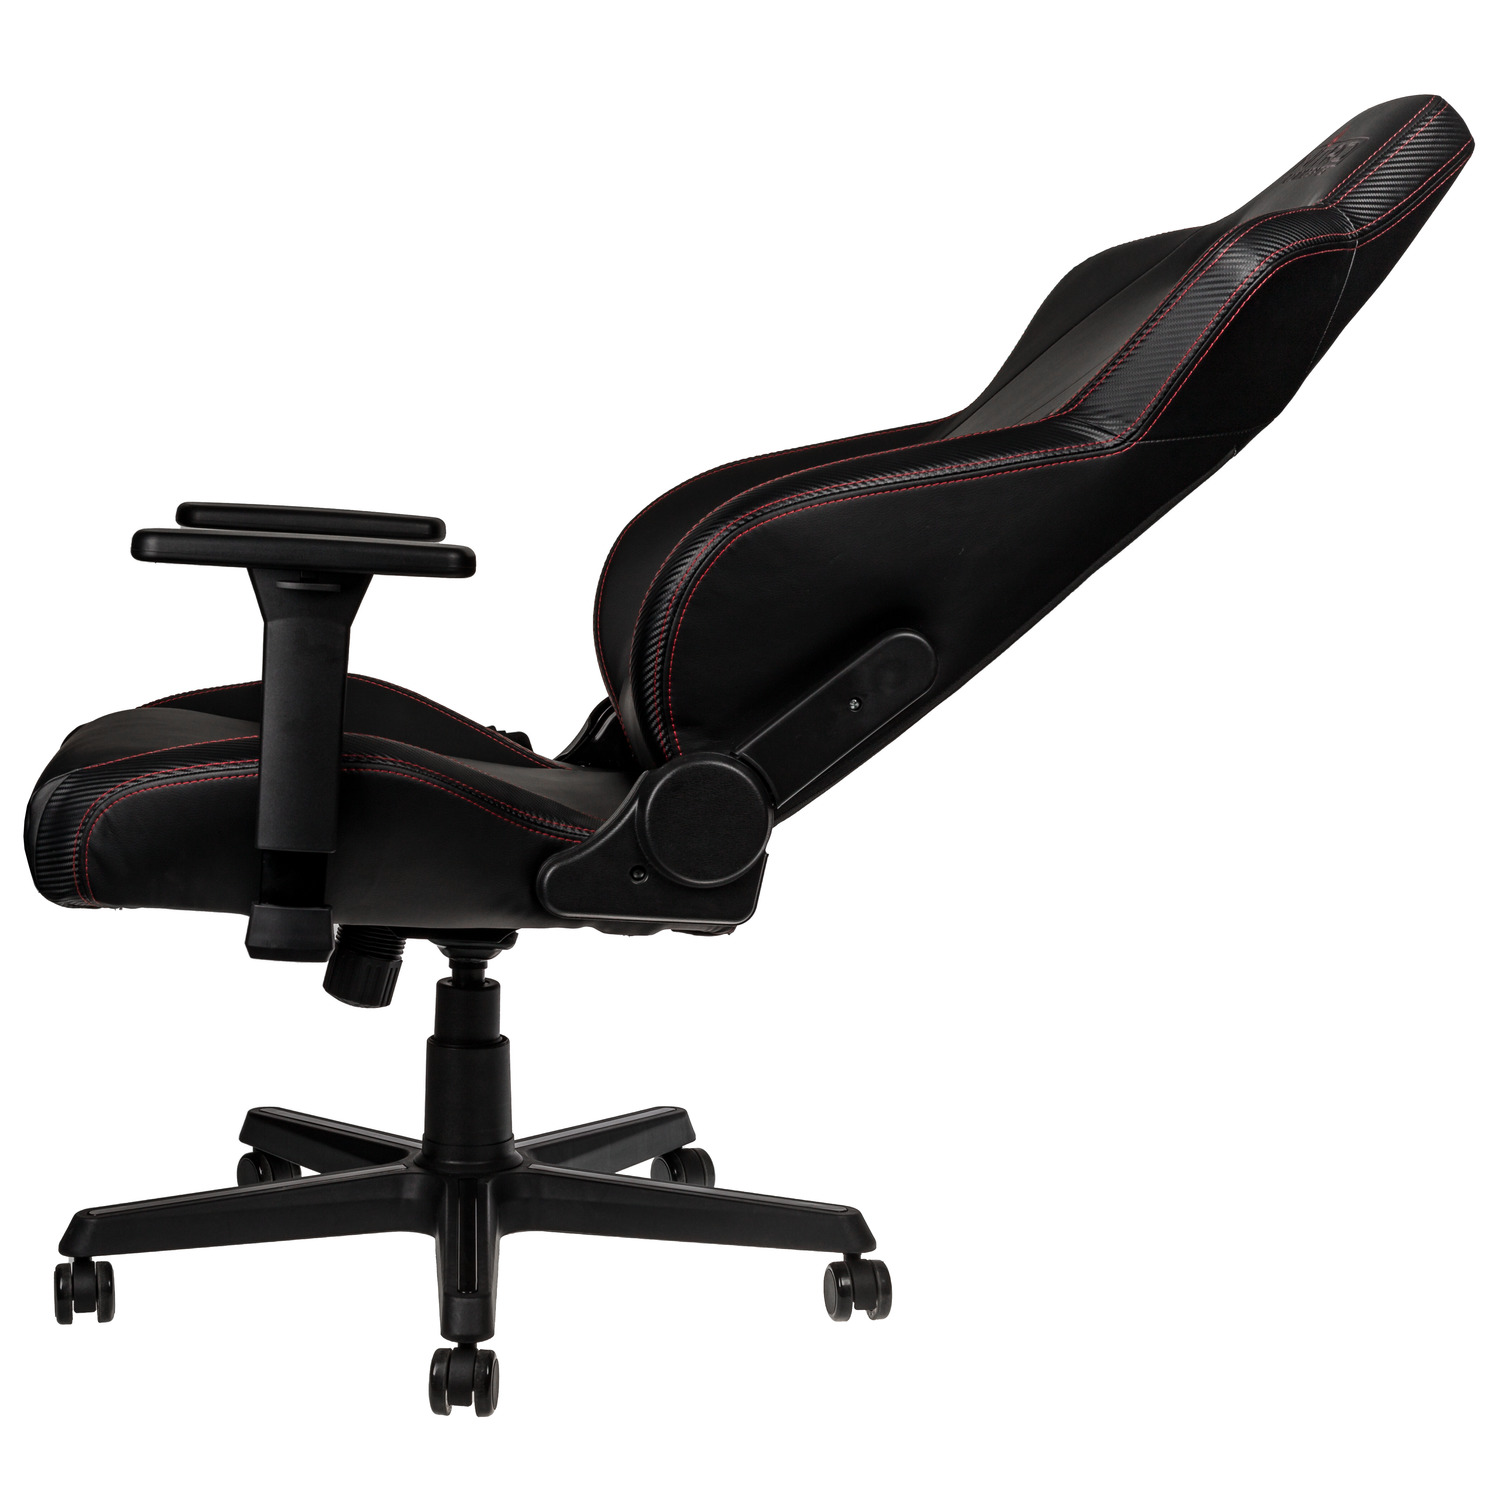 nitro-concepts - Cadeira de Gaming S300 EX Preto Carbono